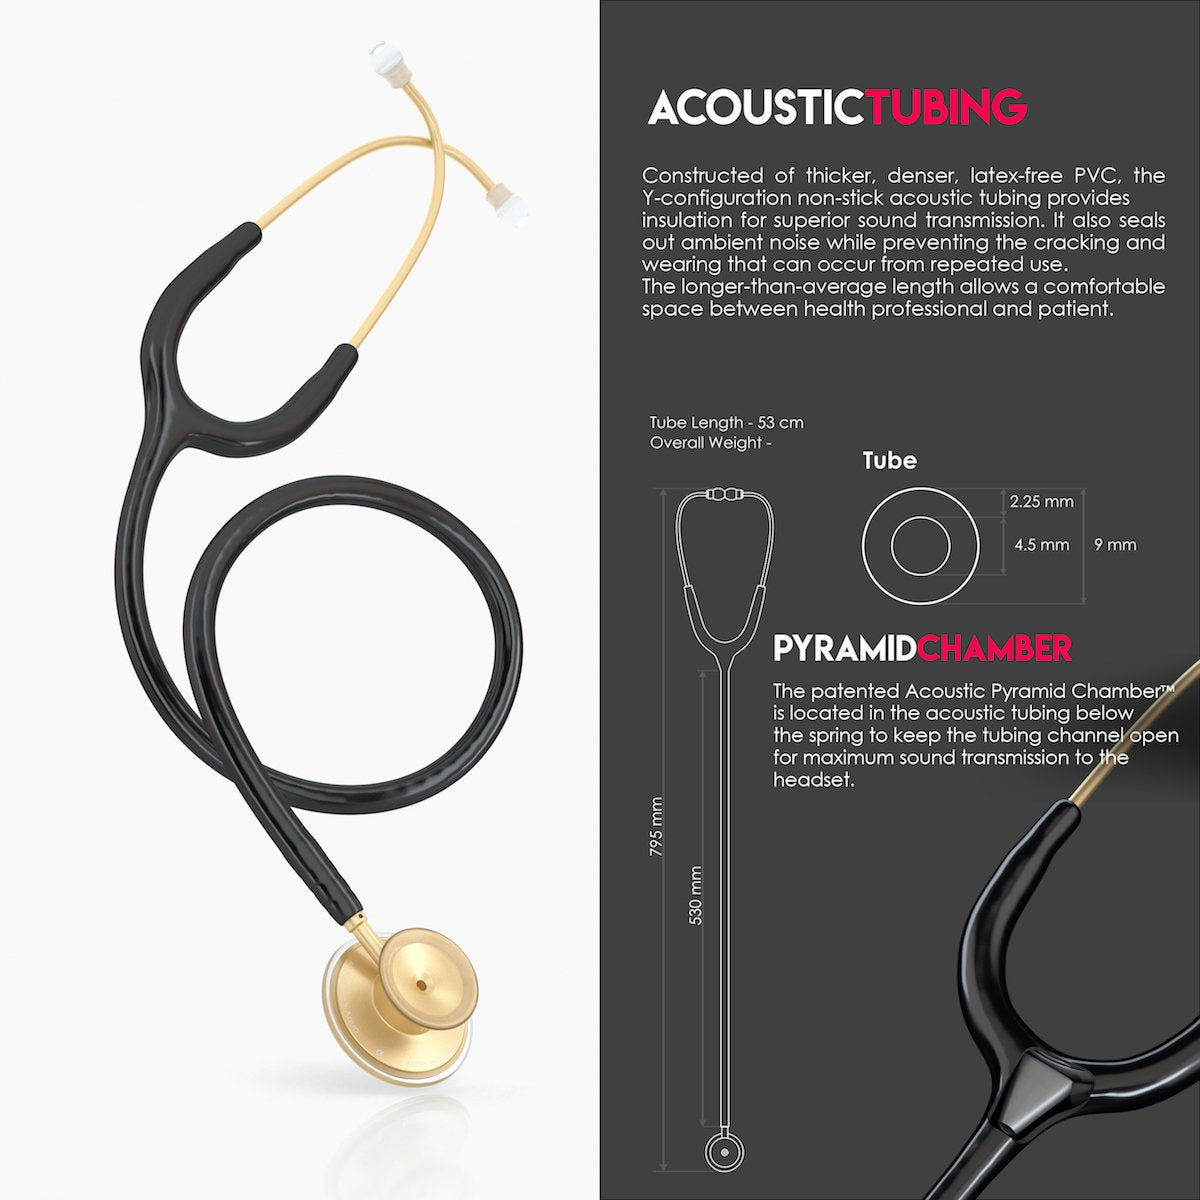 mdf acoustica stethoscope reviews